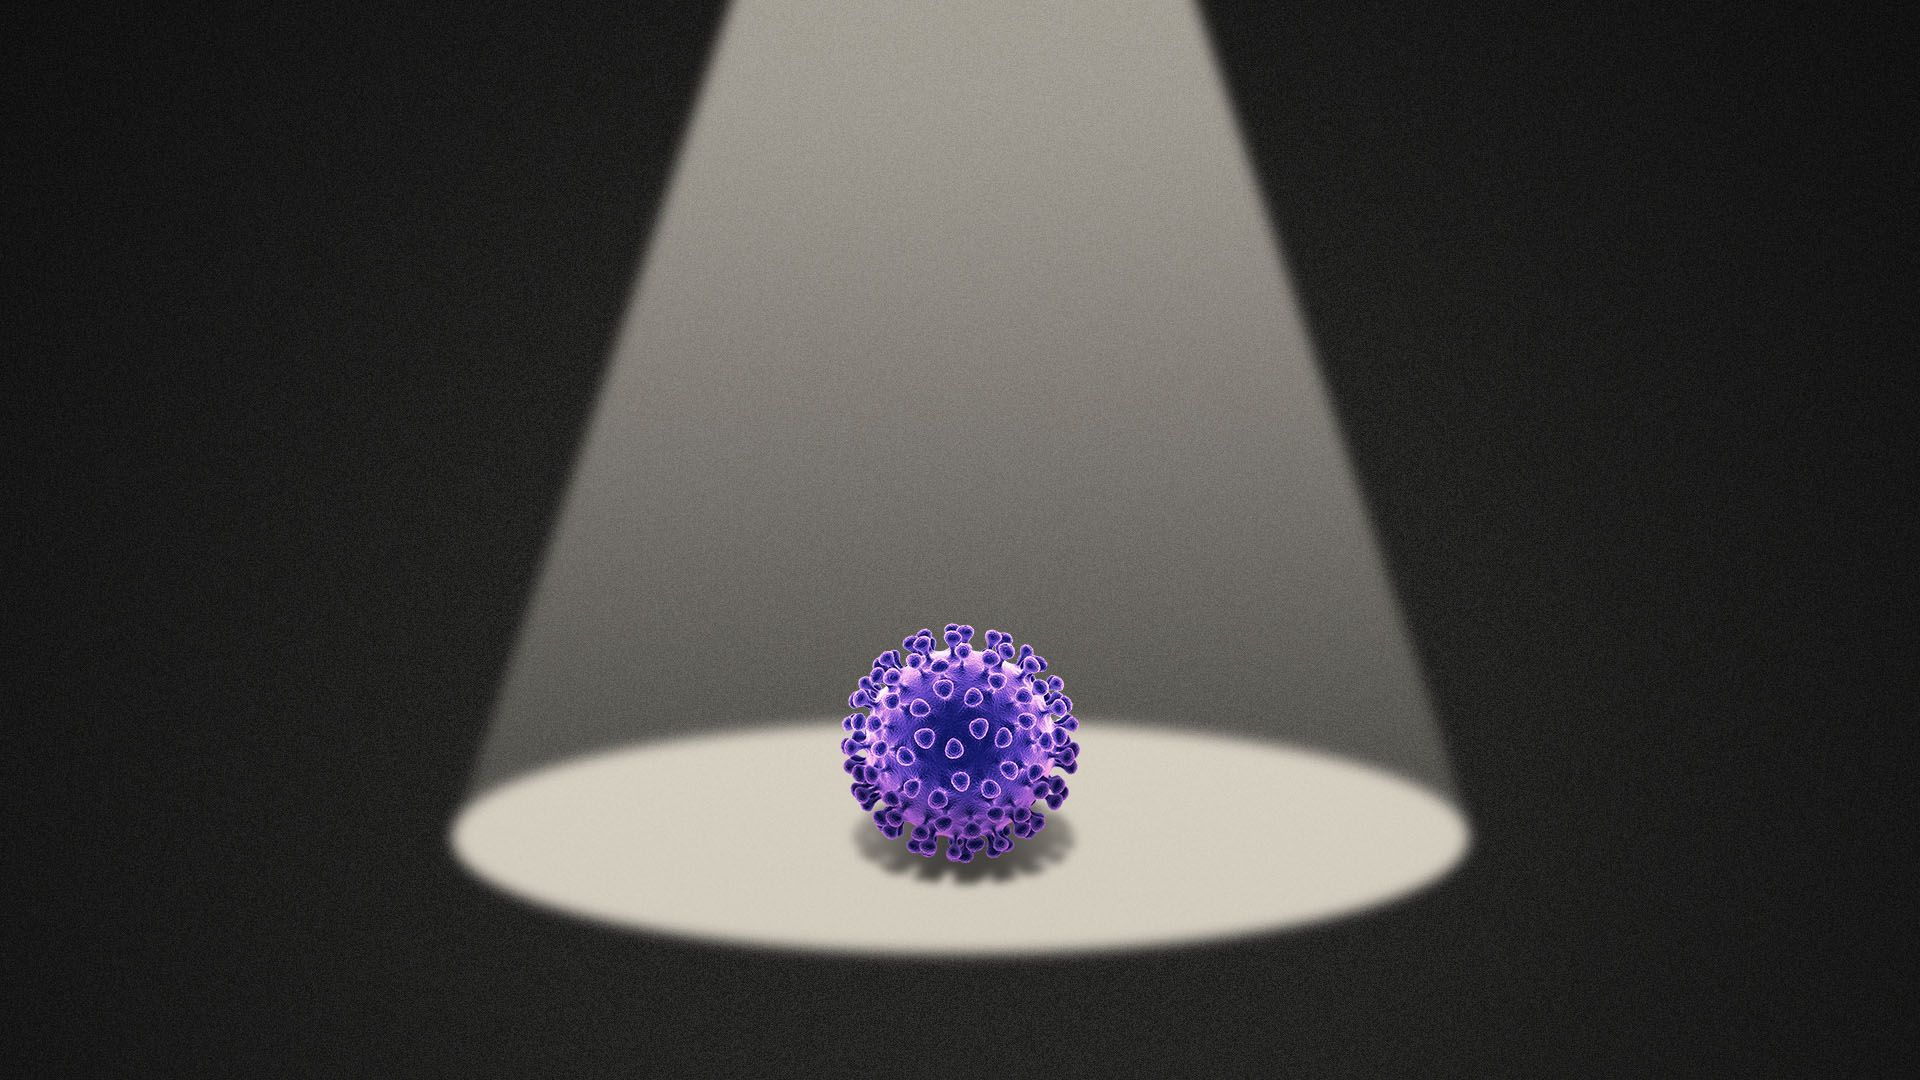 Illustration of a purple coronavirus under a spotlight in the dark